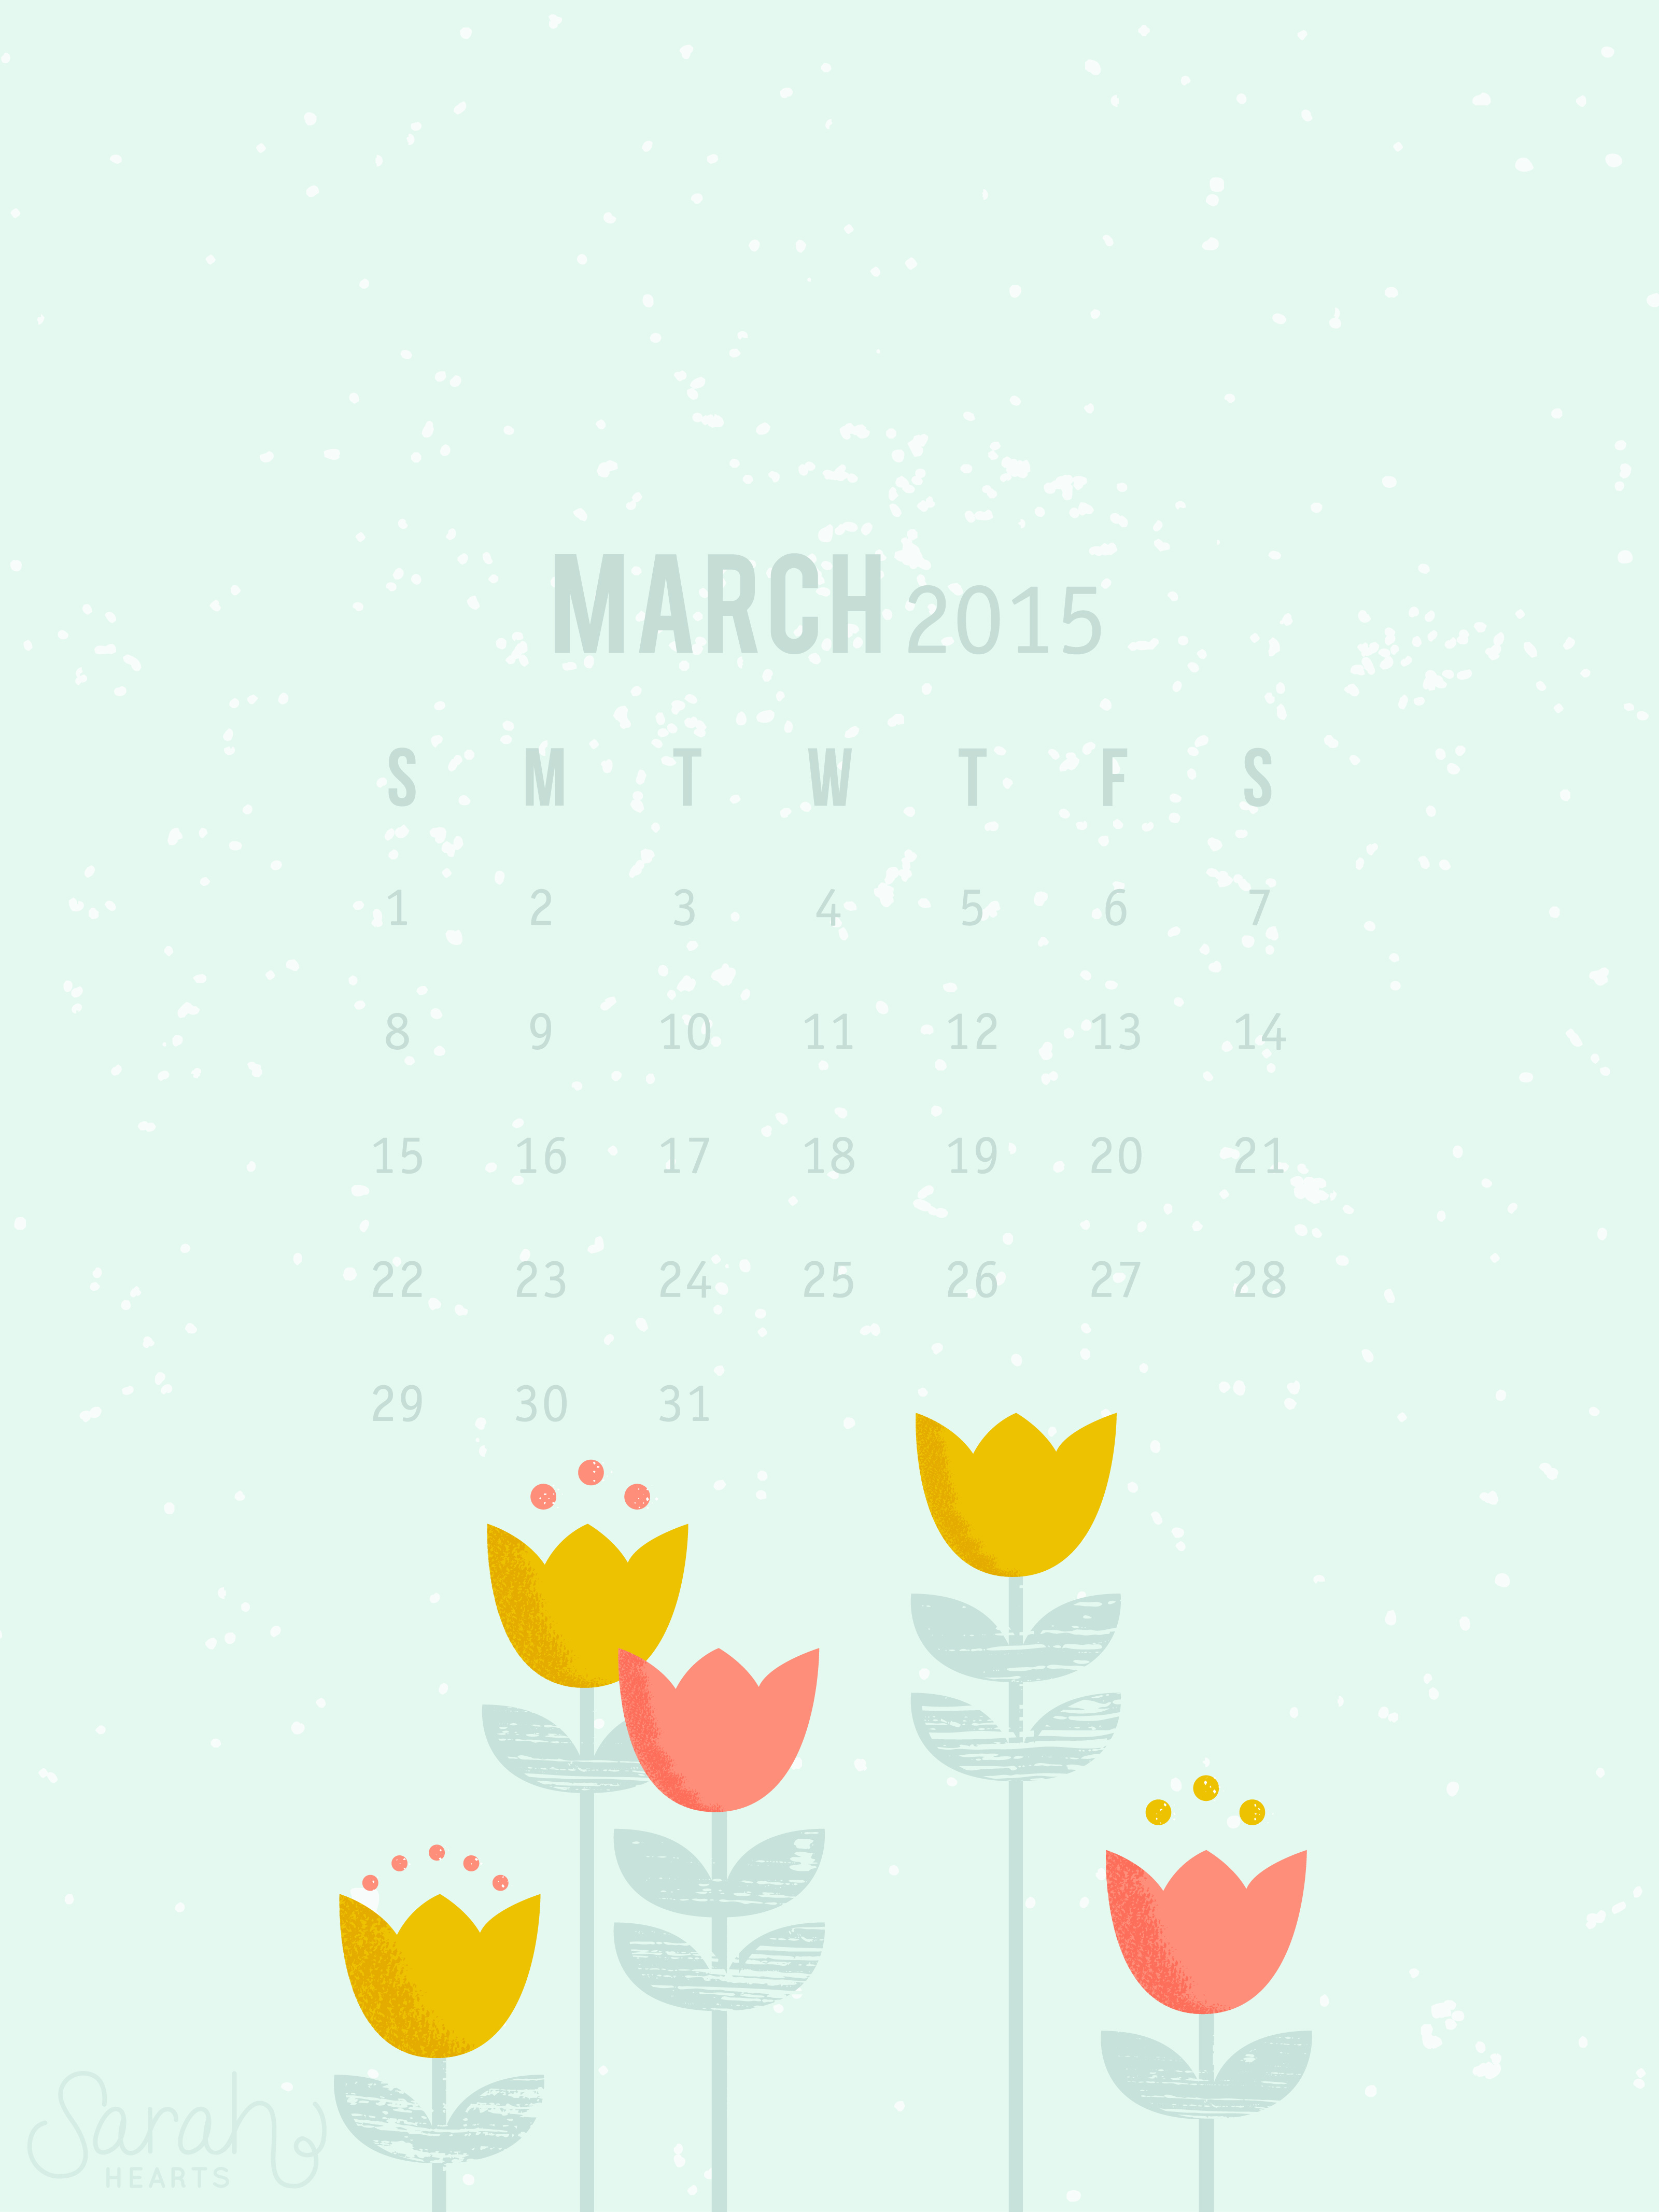 March 2015 Calendar Wallpaper - Sarah Hearts